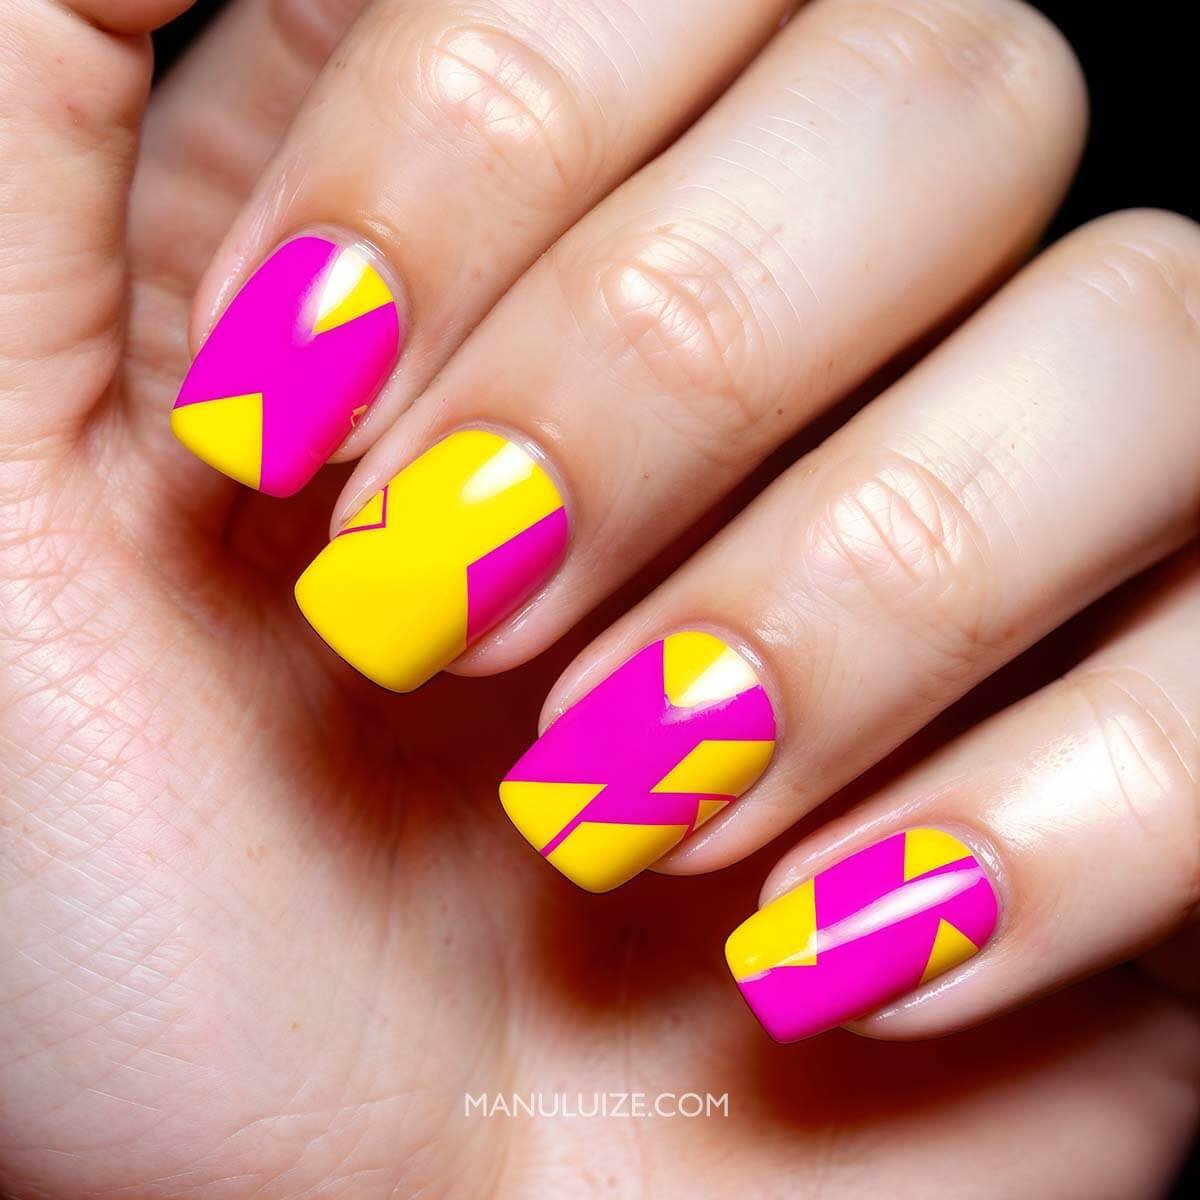 Neon pink and yellow art